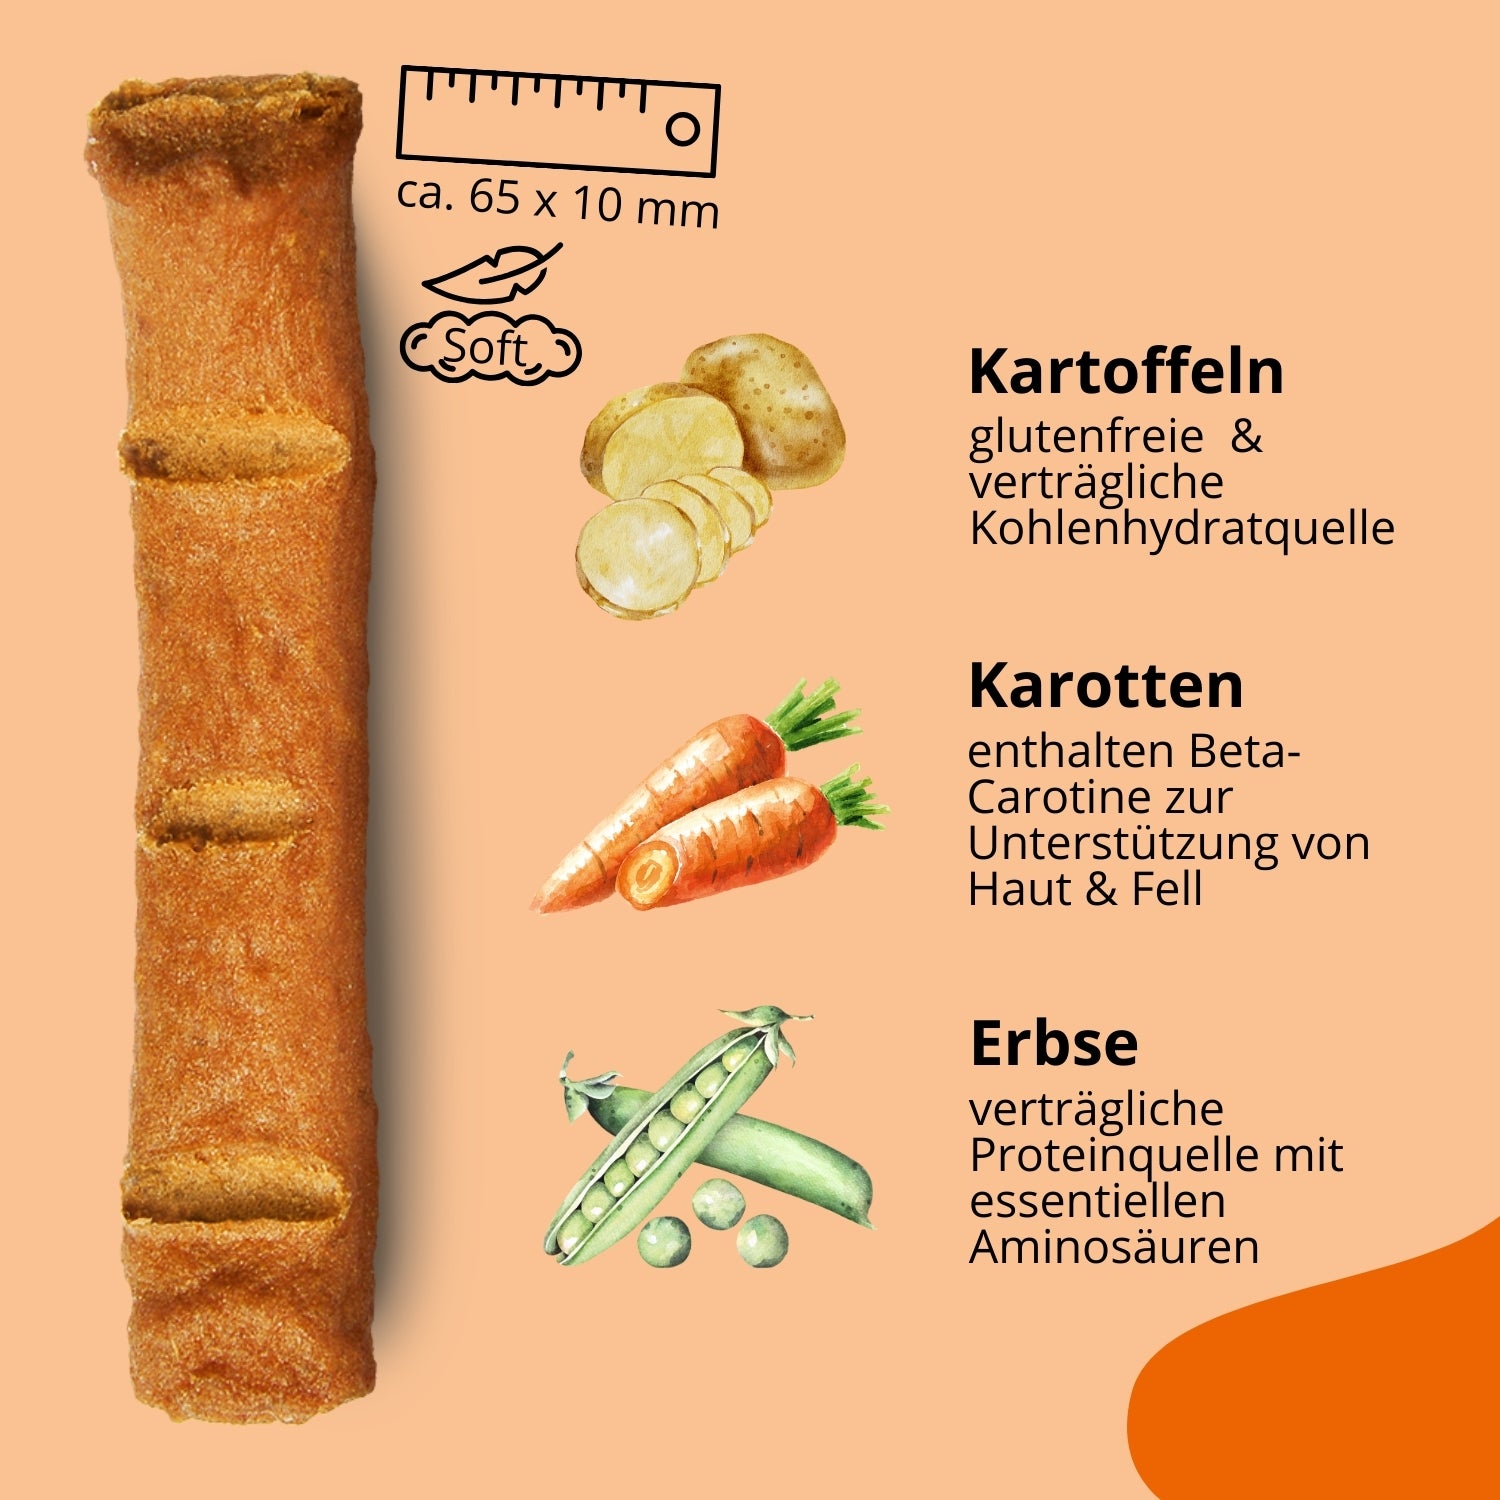 Soft snack sticks - carrot